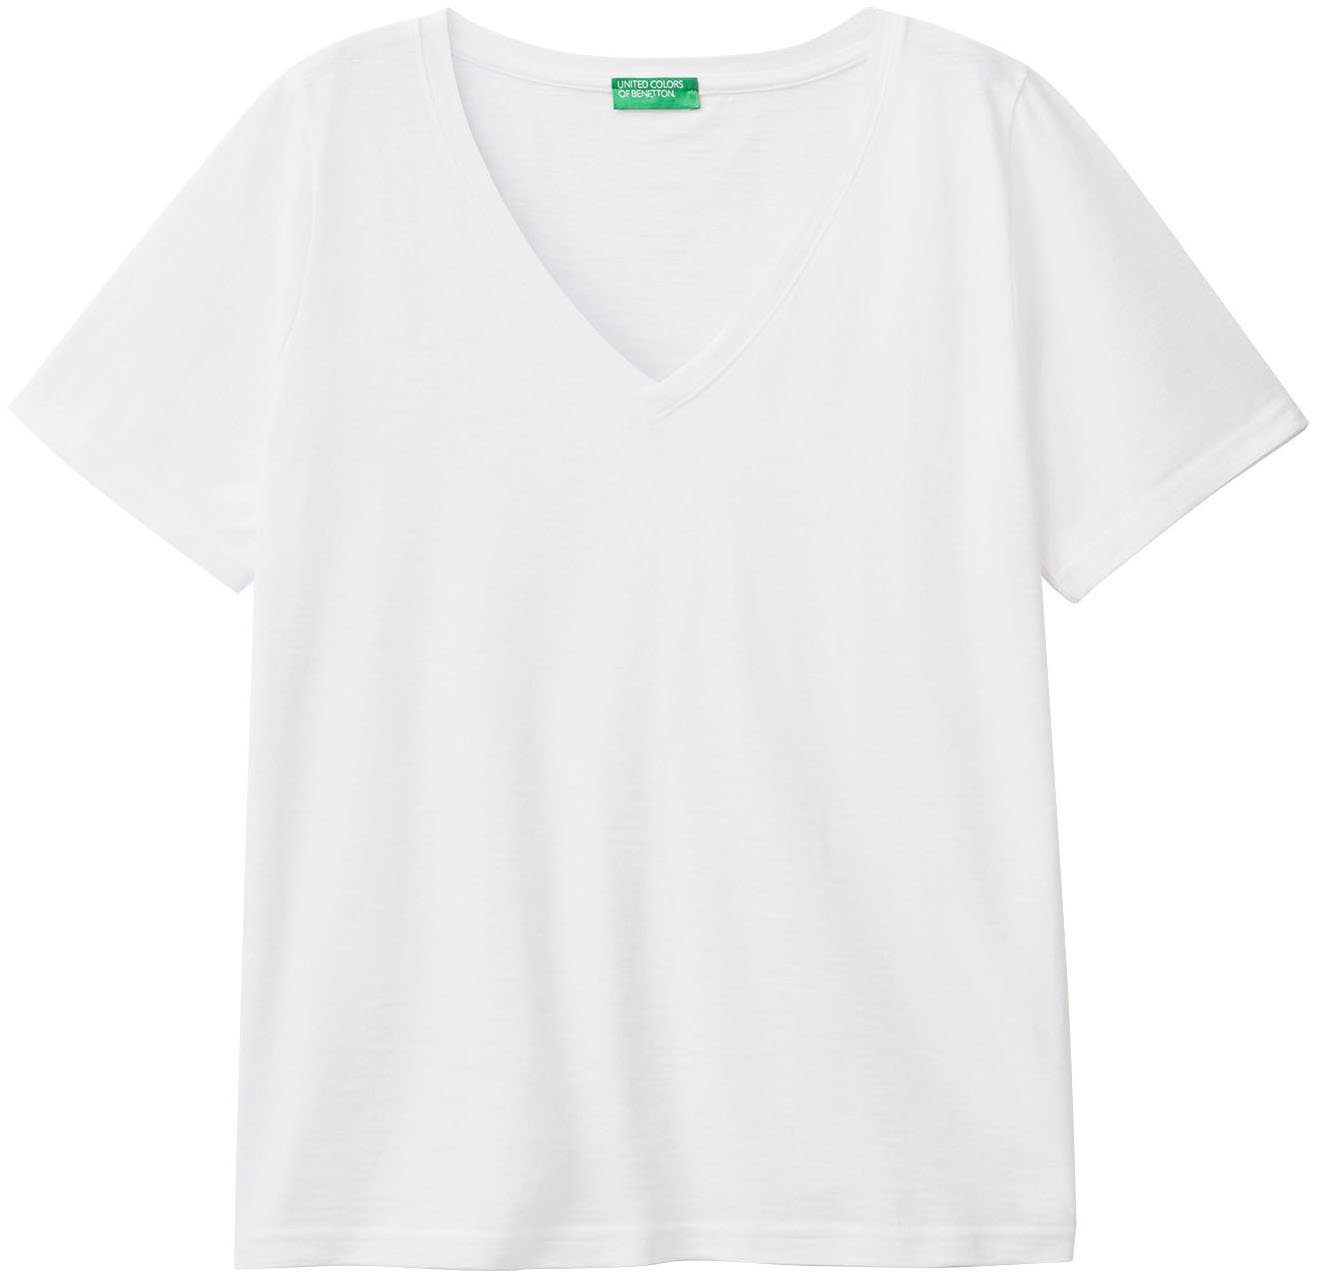 Benetton T-Shirt wollweiß Flammgarnjersey of aus Colors United